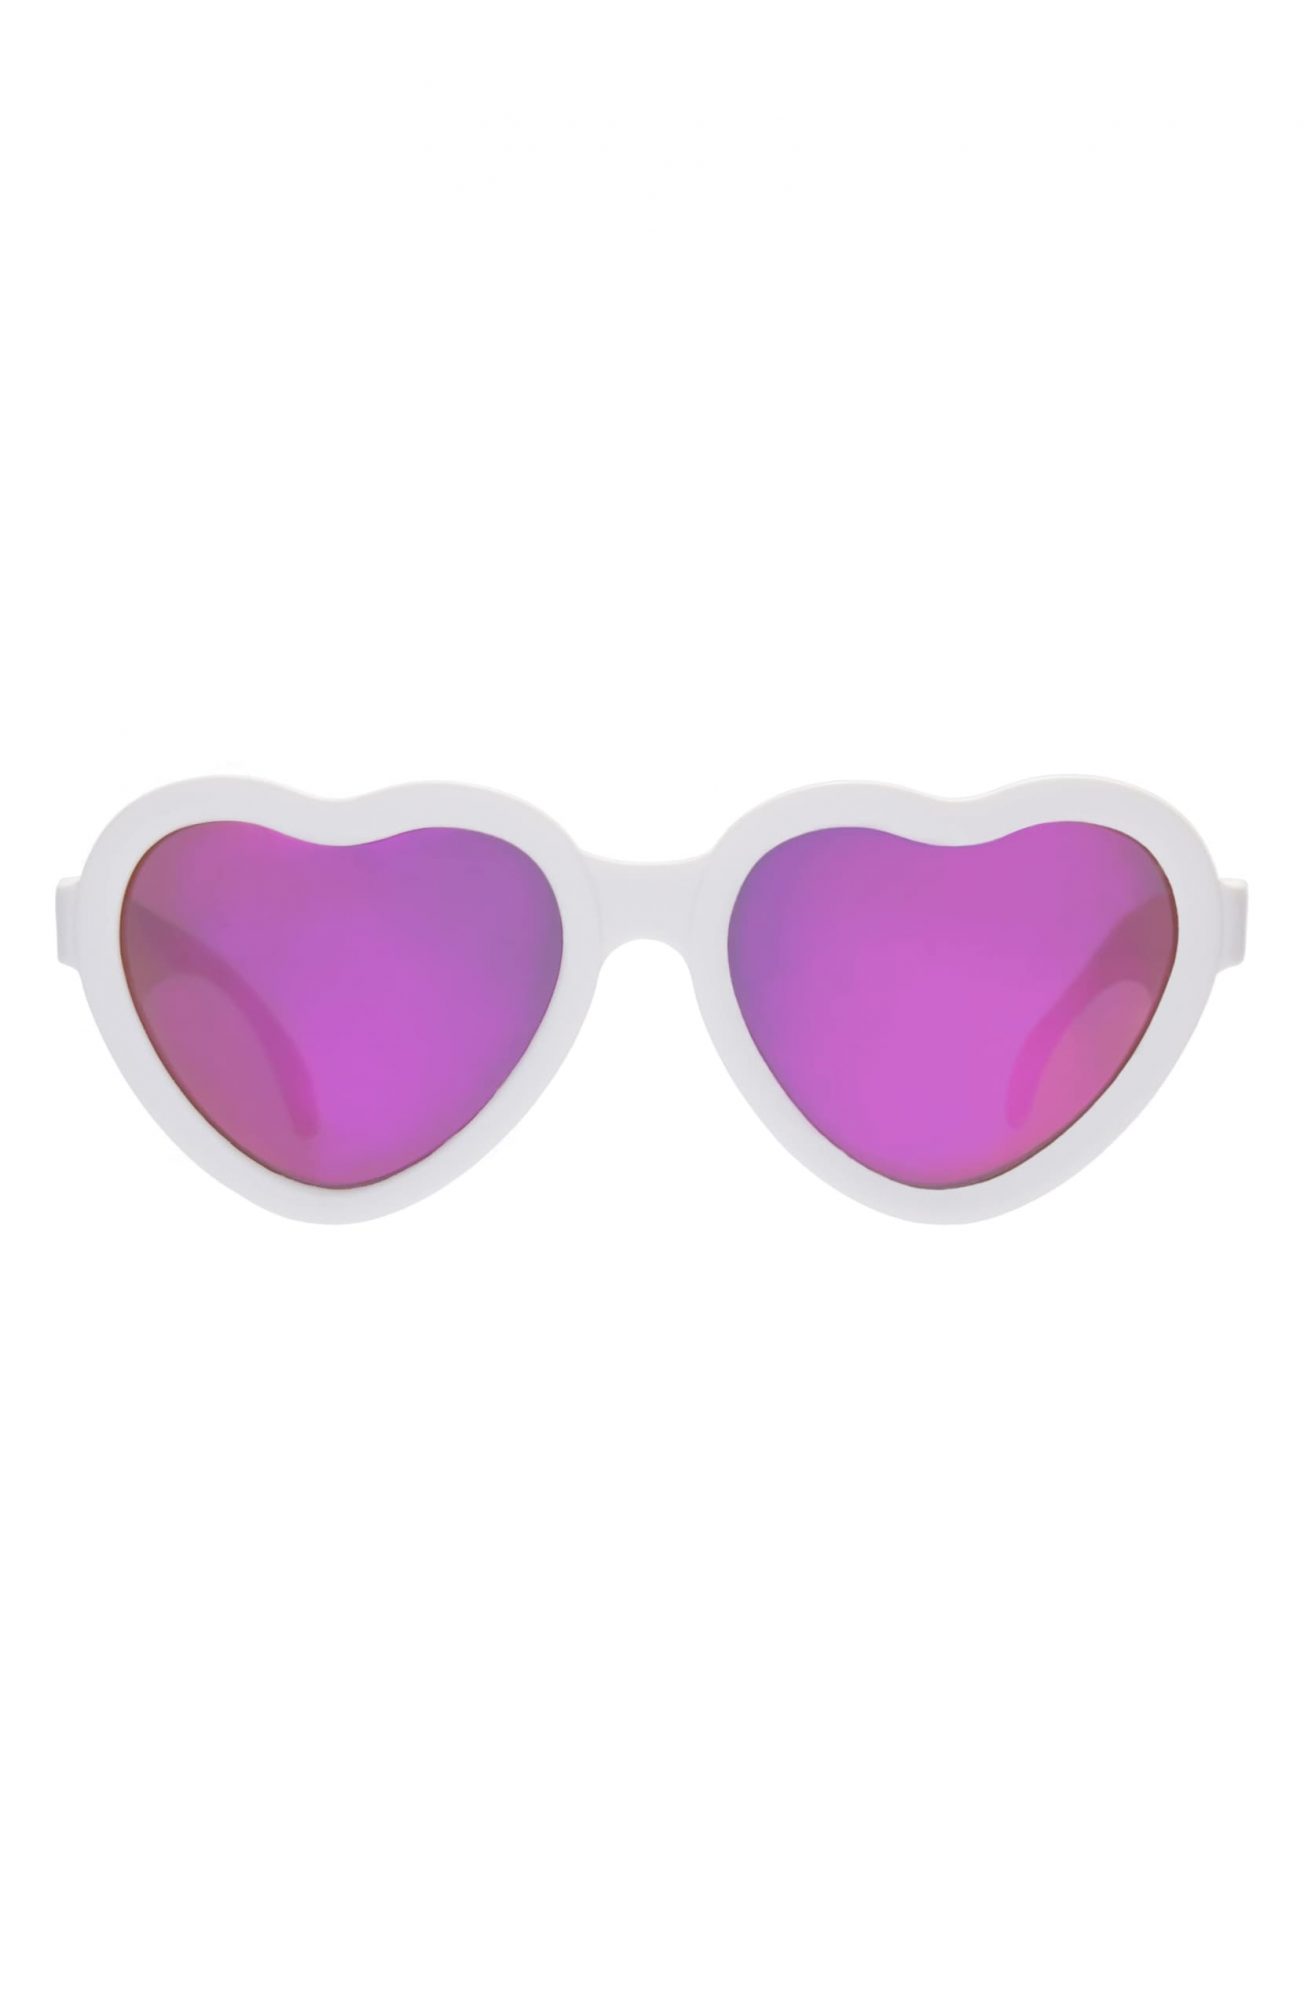 Babiators heart-shaped sunglasses